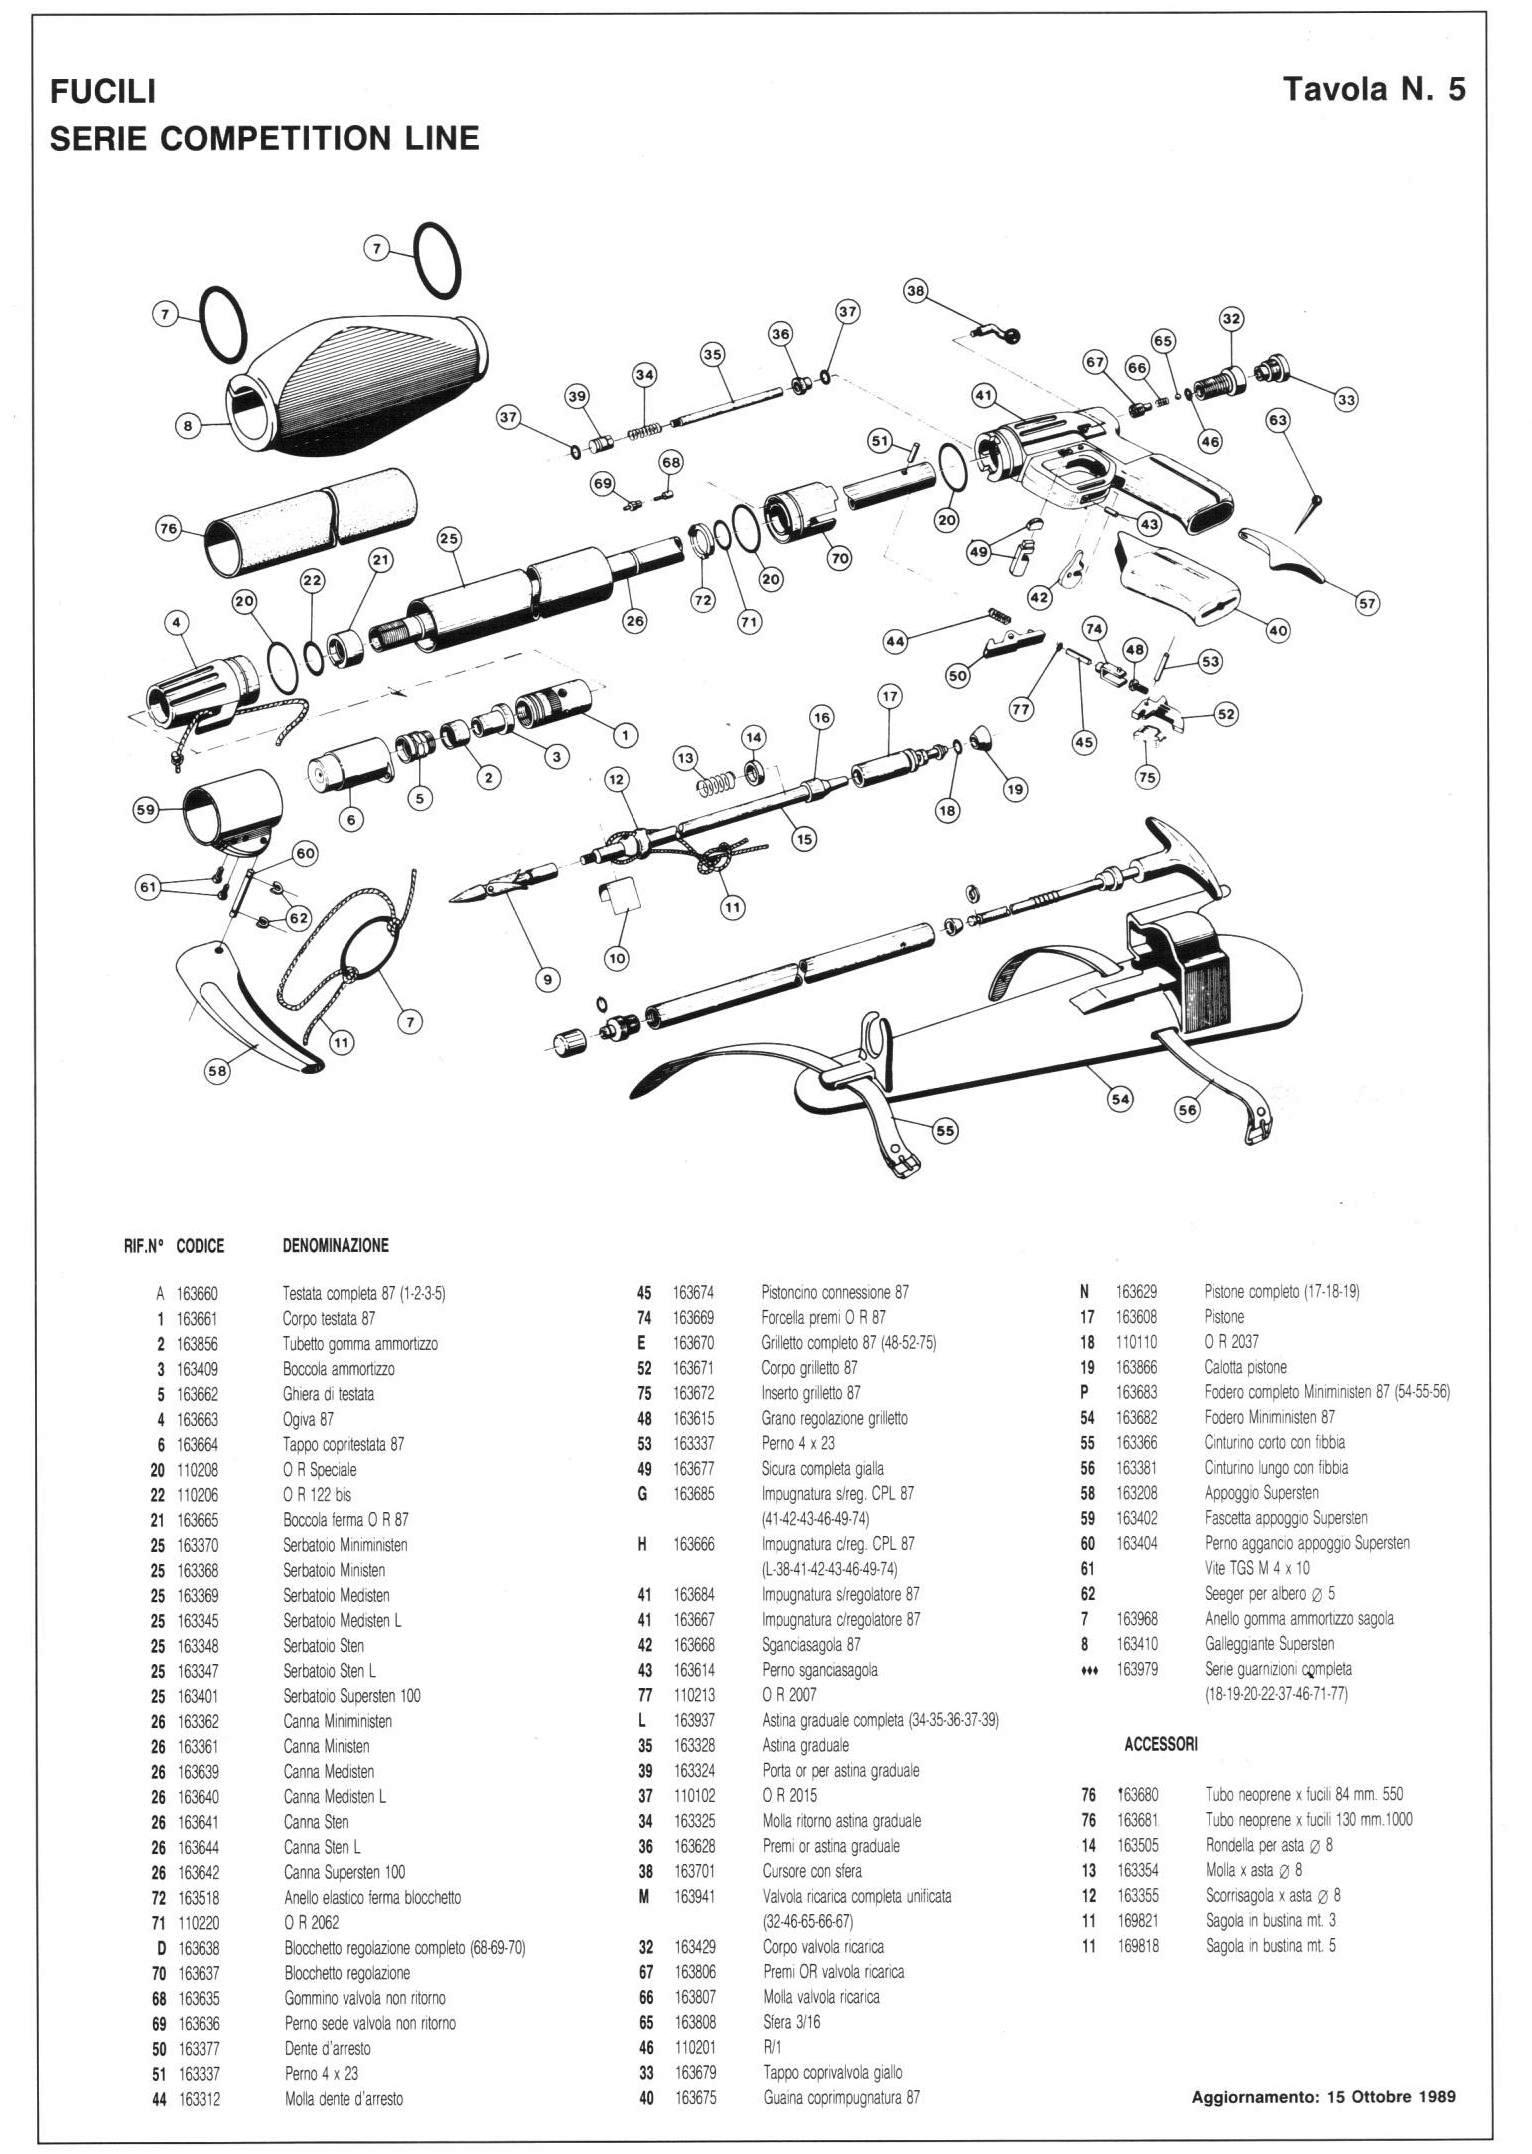 Sten Competition Line parts diagram.jpg